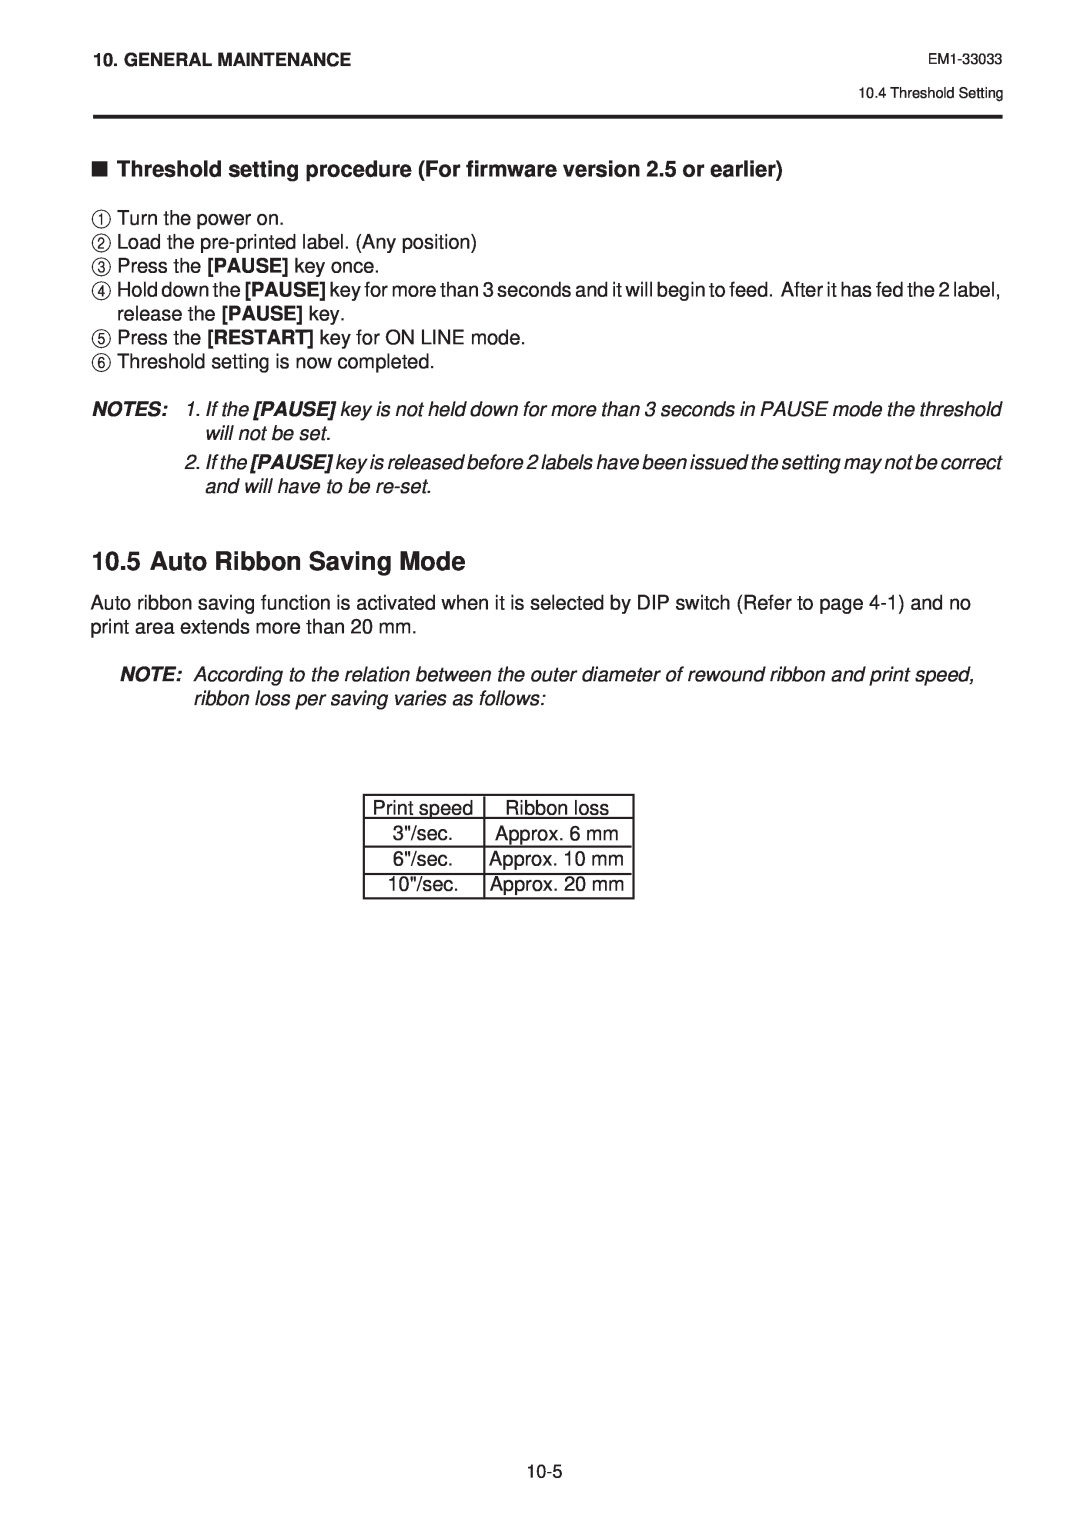 Toshiba EM1-33033E owner manual Auto Ribbon Saving Mode, Threshold setting procedure For firmware version 2.5 or earlier 